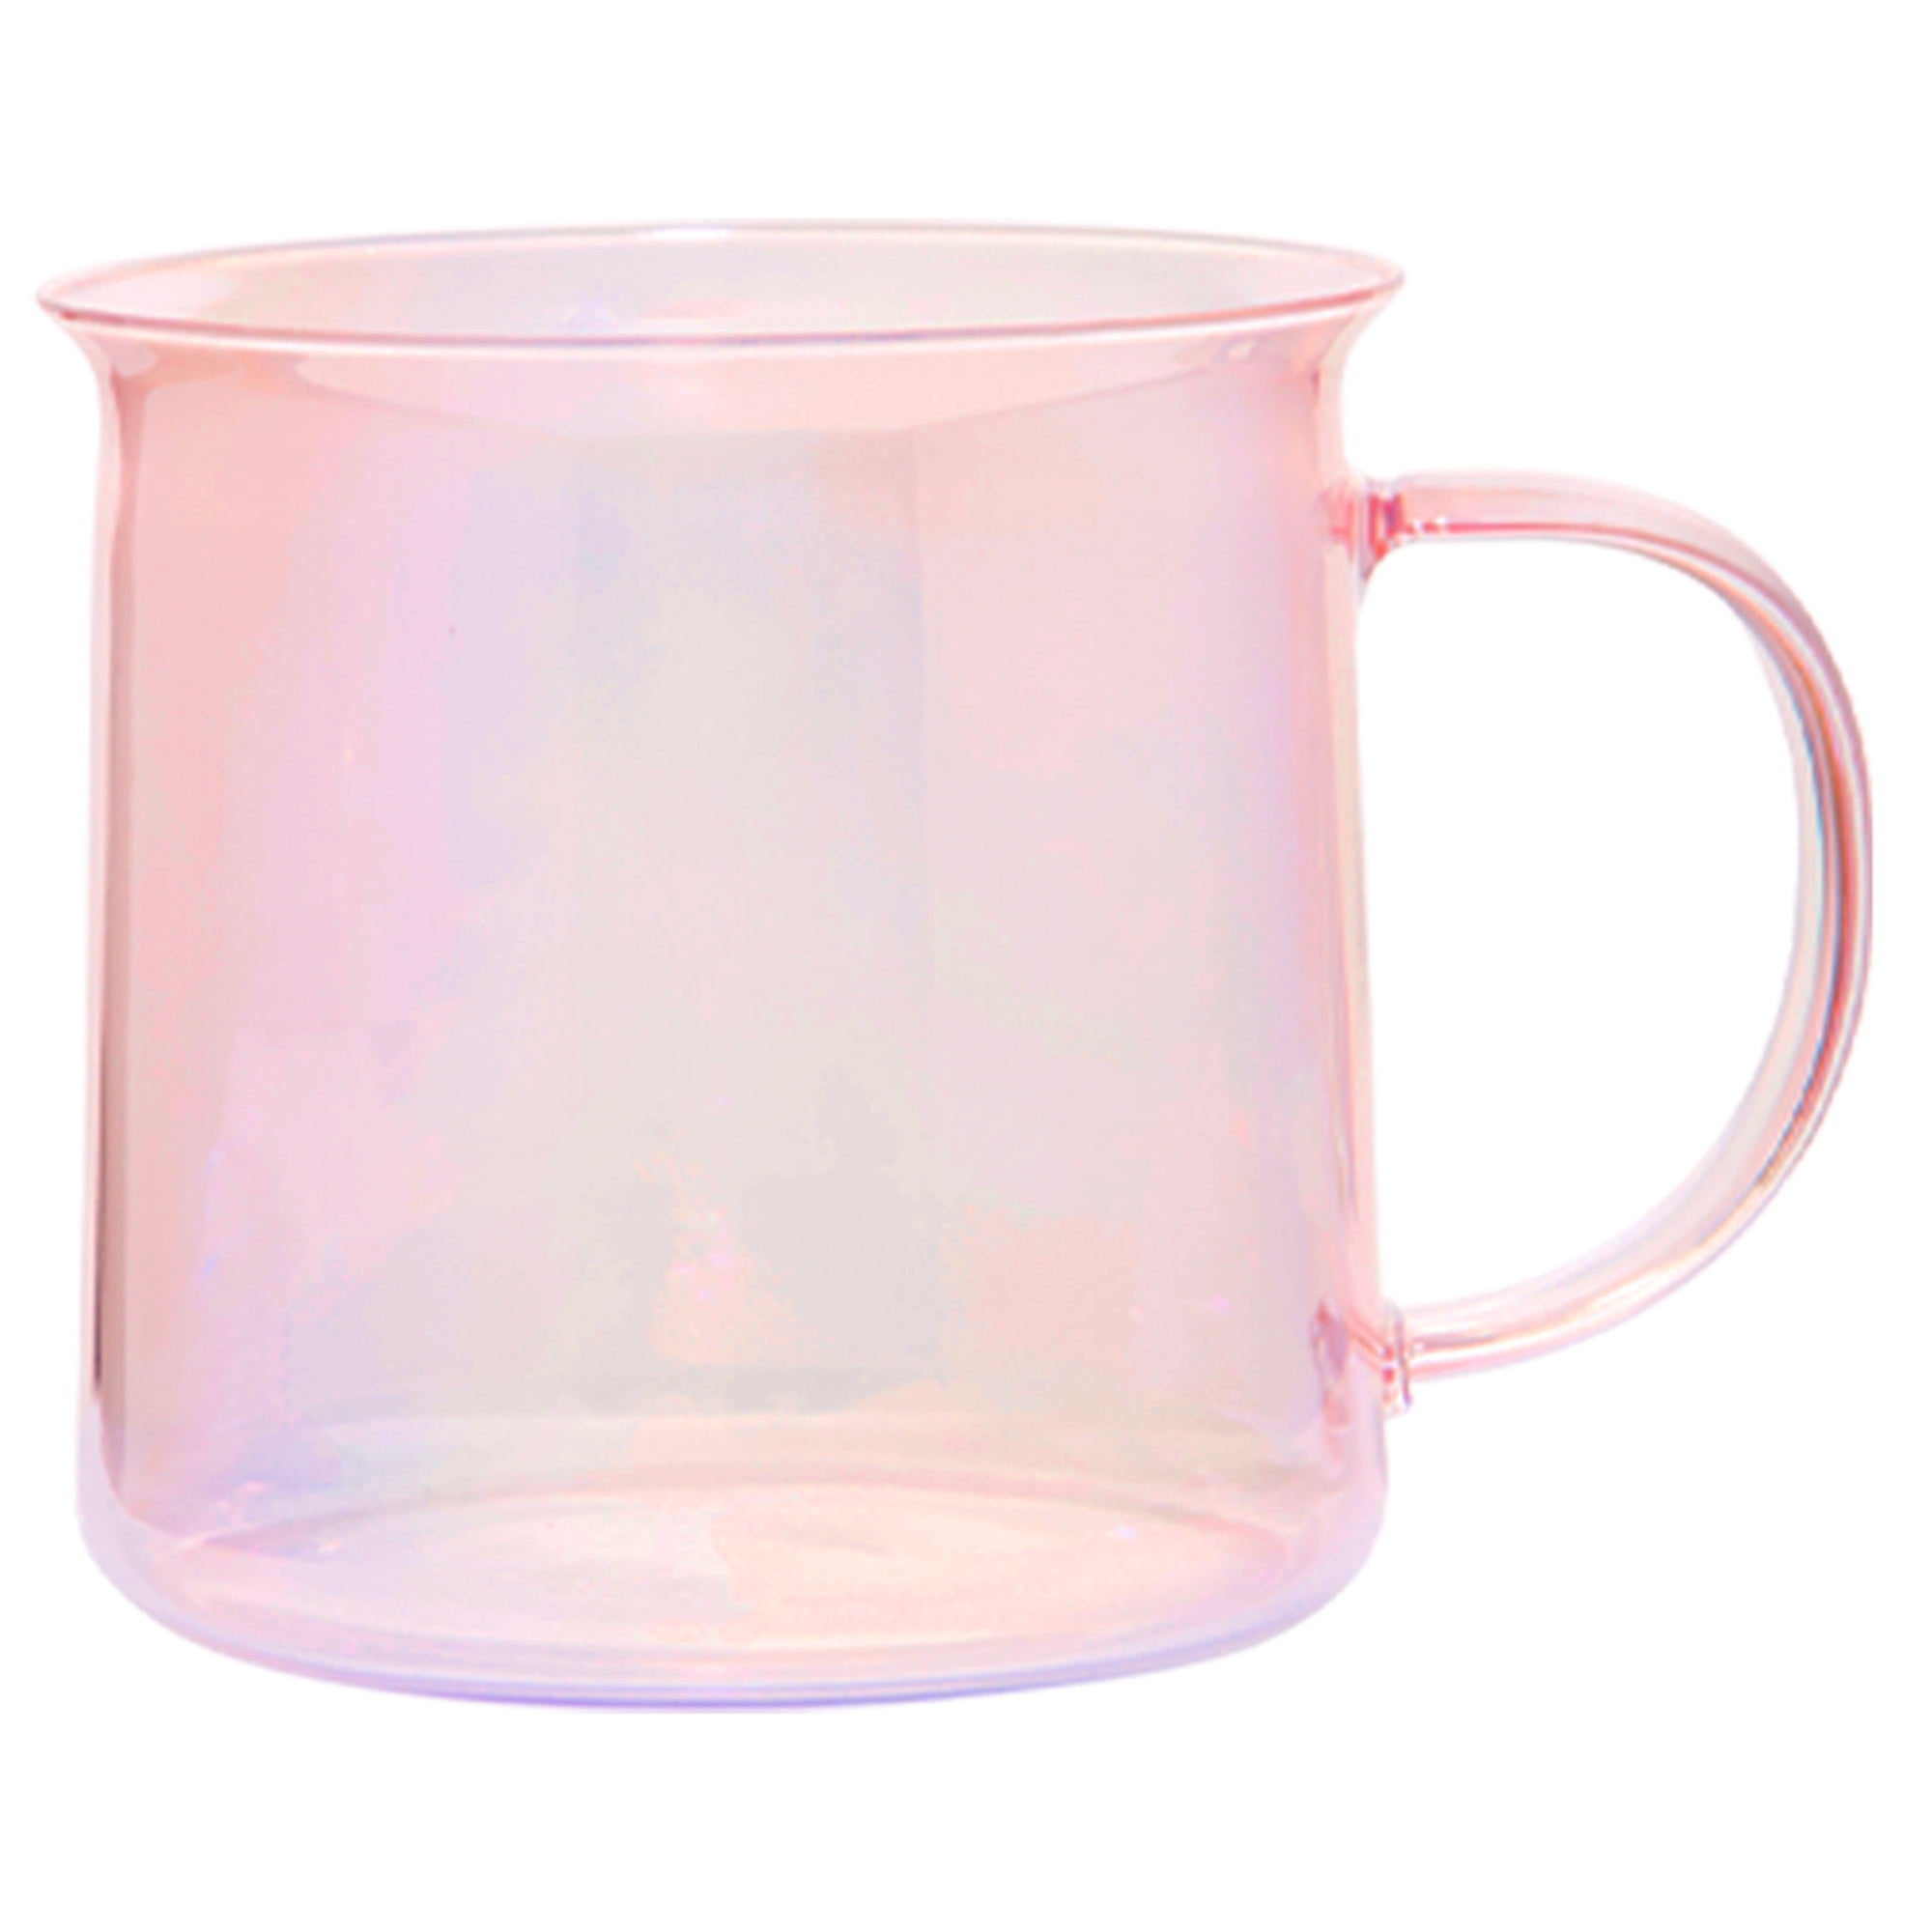 Mainstays Pink Camp Glass 18 fl oz Mug, Heat-Resistant Borosilicate Glass